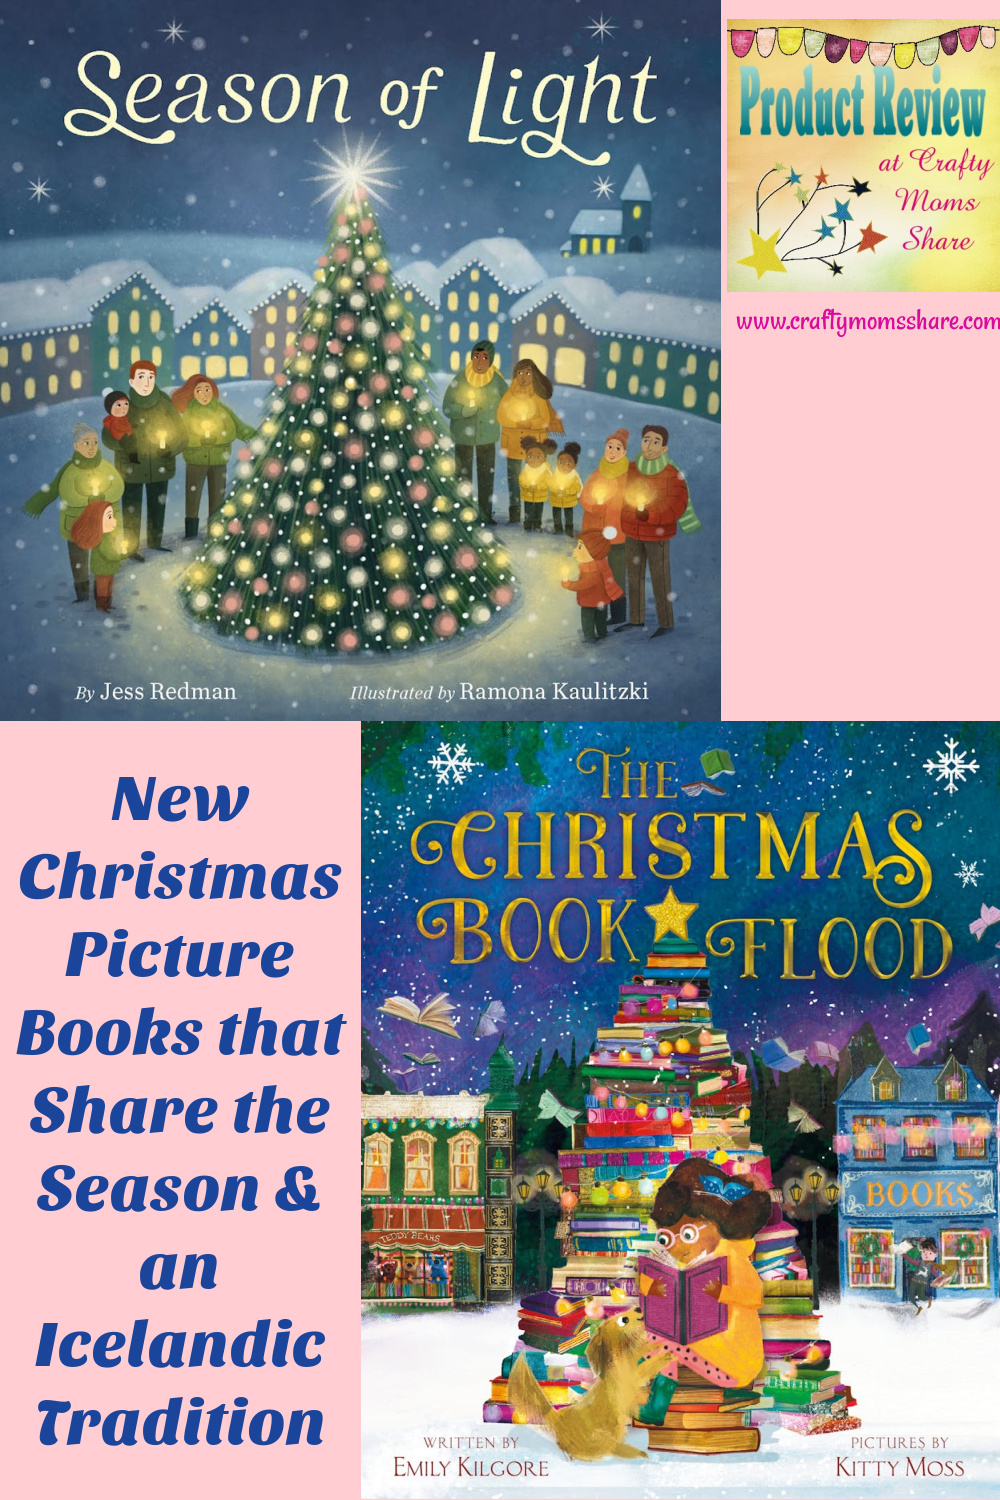 Kittling: Books: Saturday Snapshot: My Favorite Christmas Tree